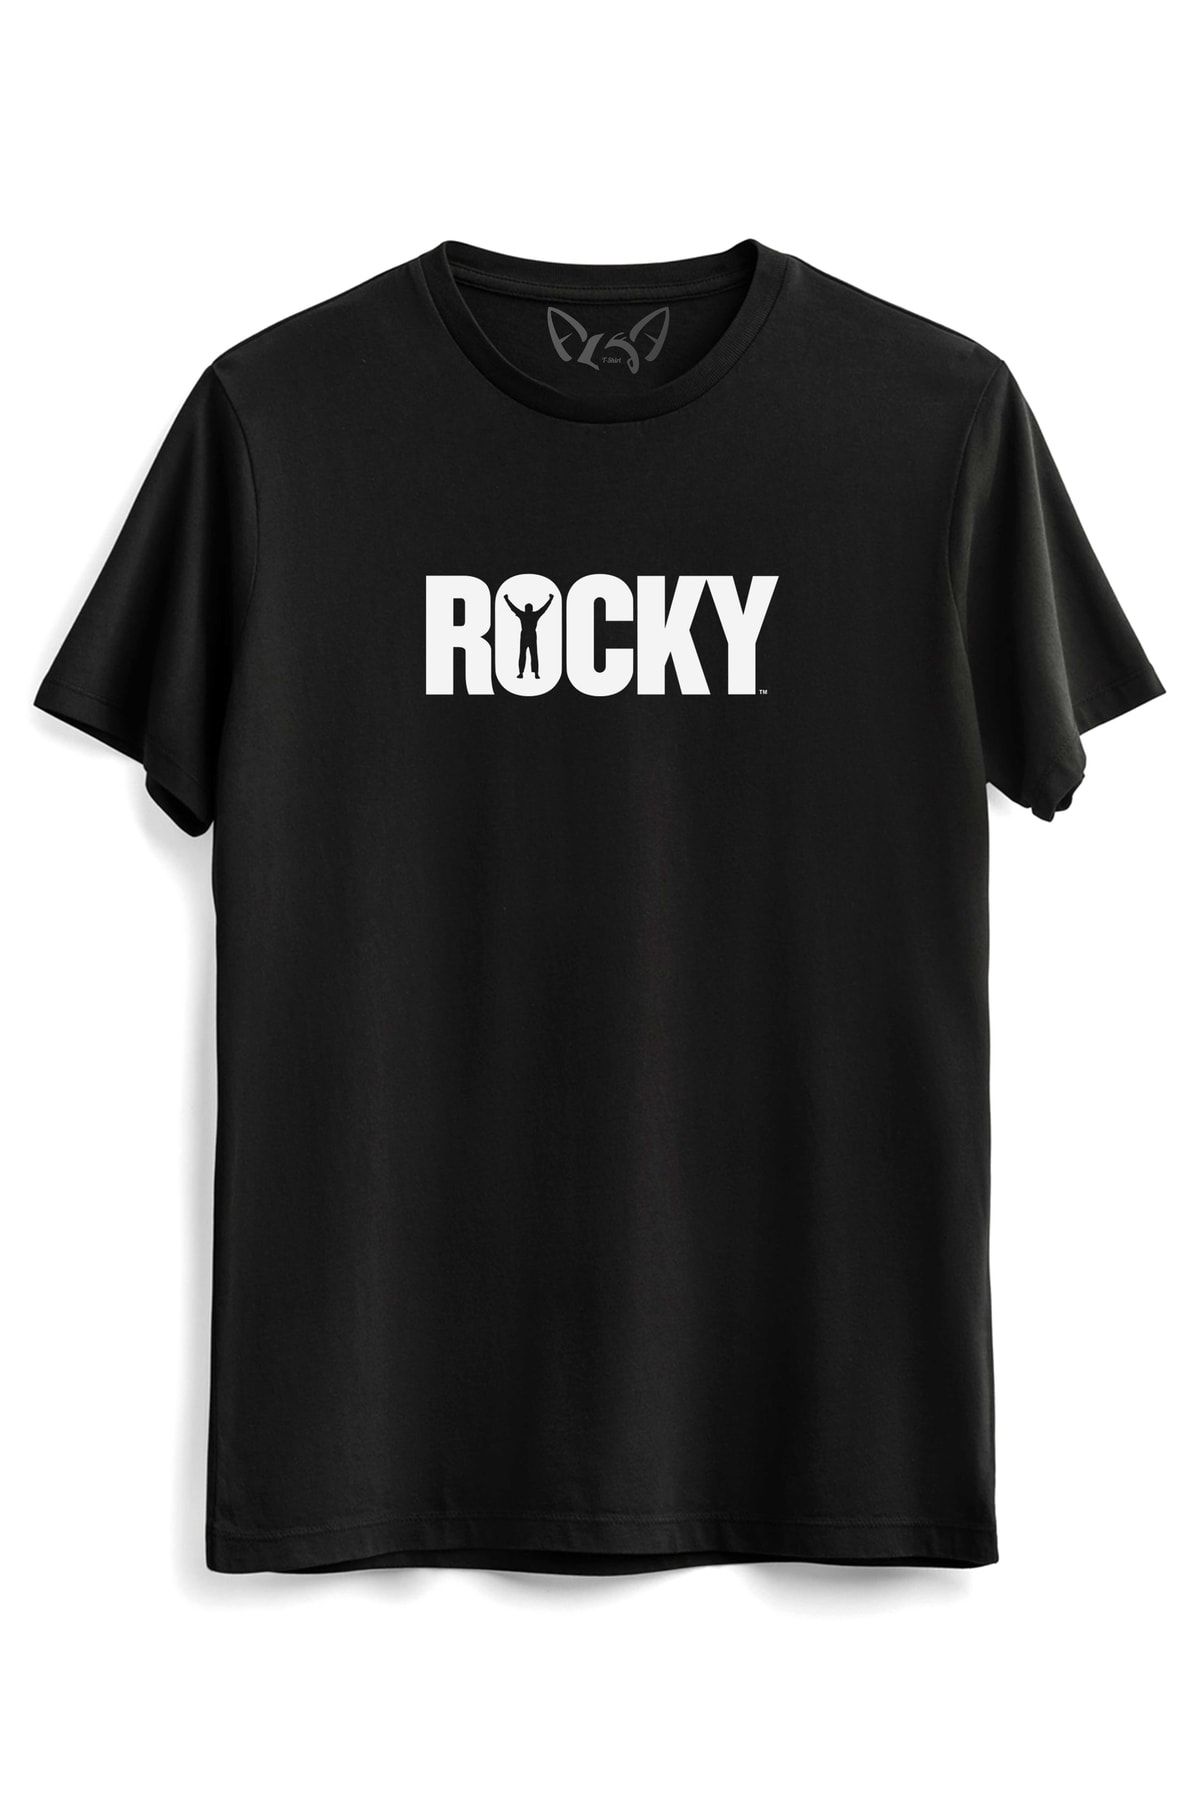 Alfa Tshirt Unisex Rocky Balboa Baskılı Siyah T-shirt